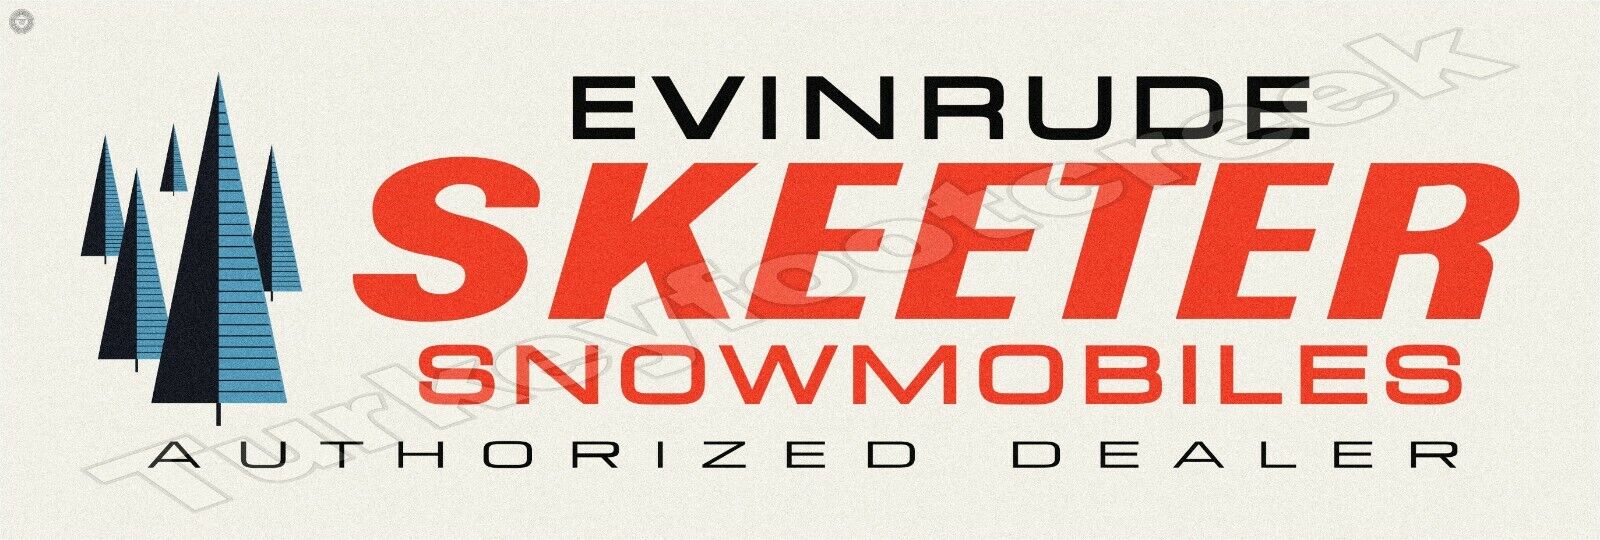 Evinrude Skeeter Snowmobiles Authorized Dealer 6\